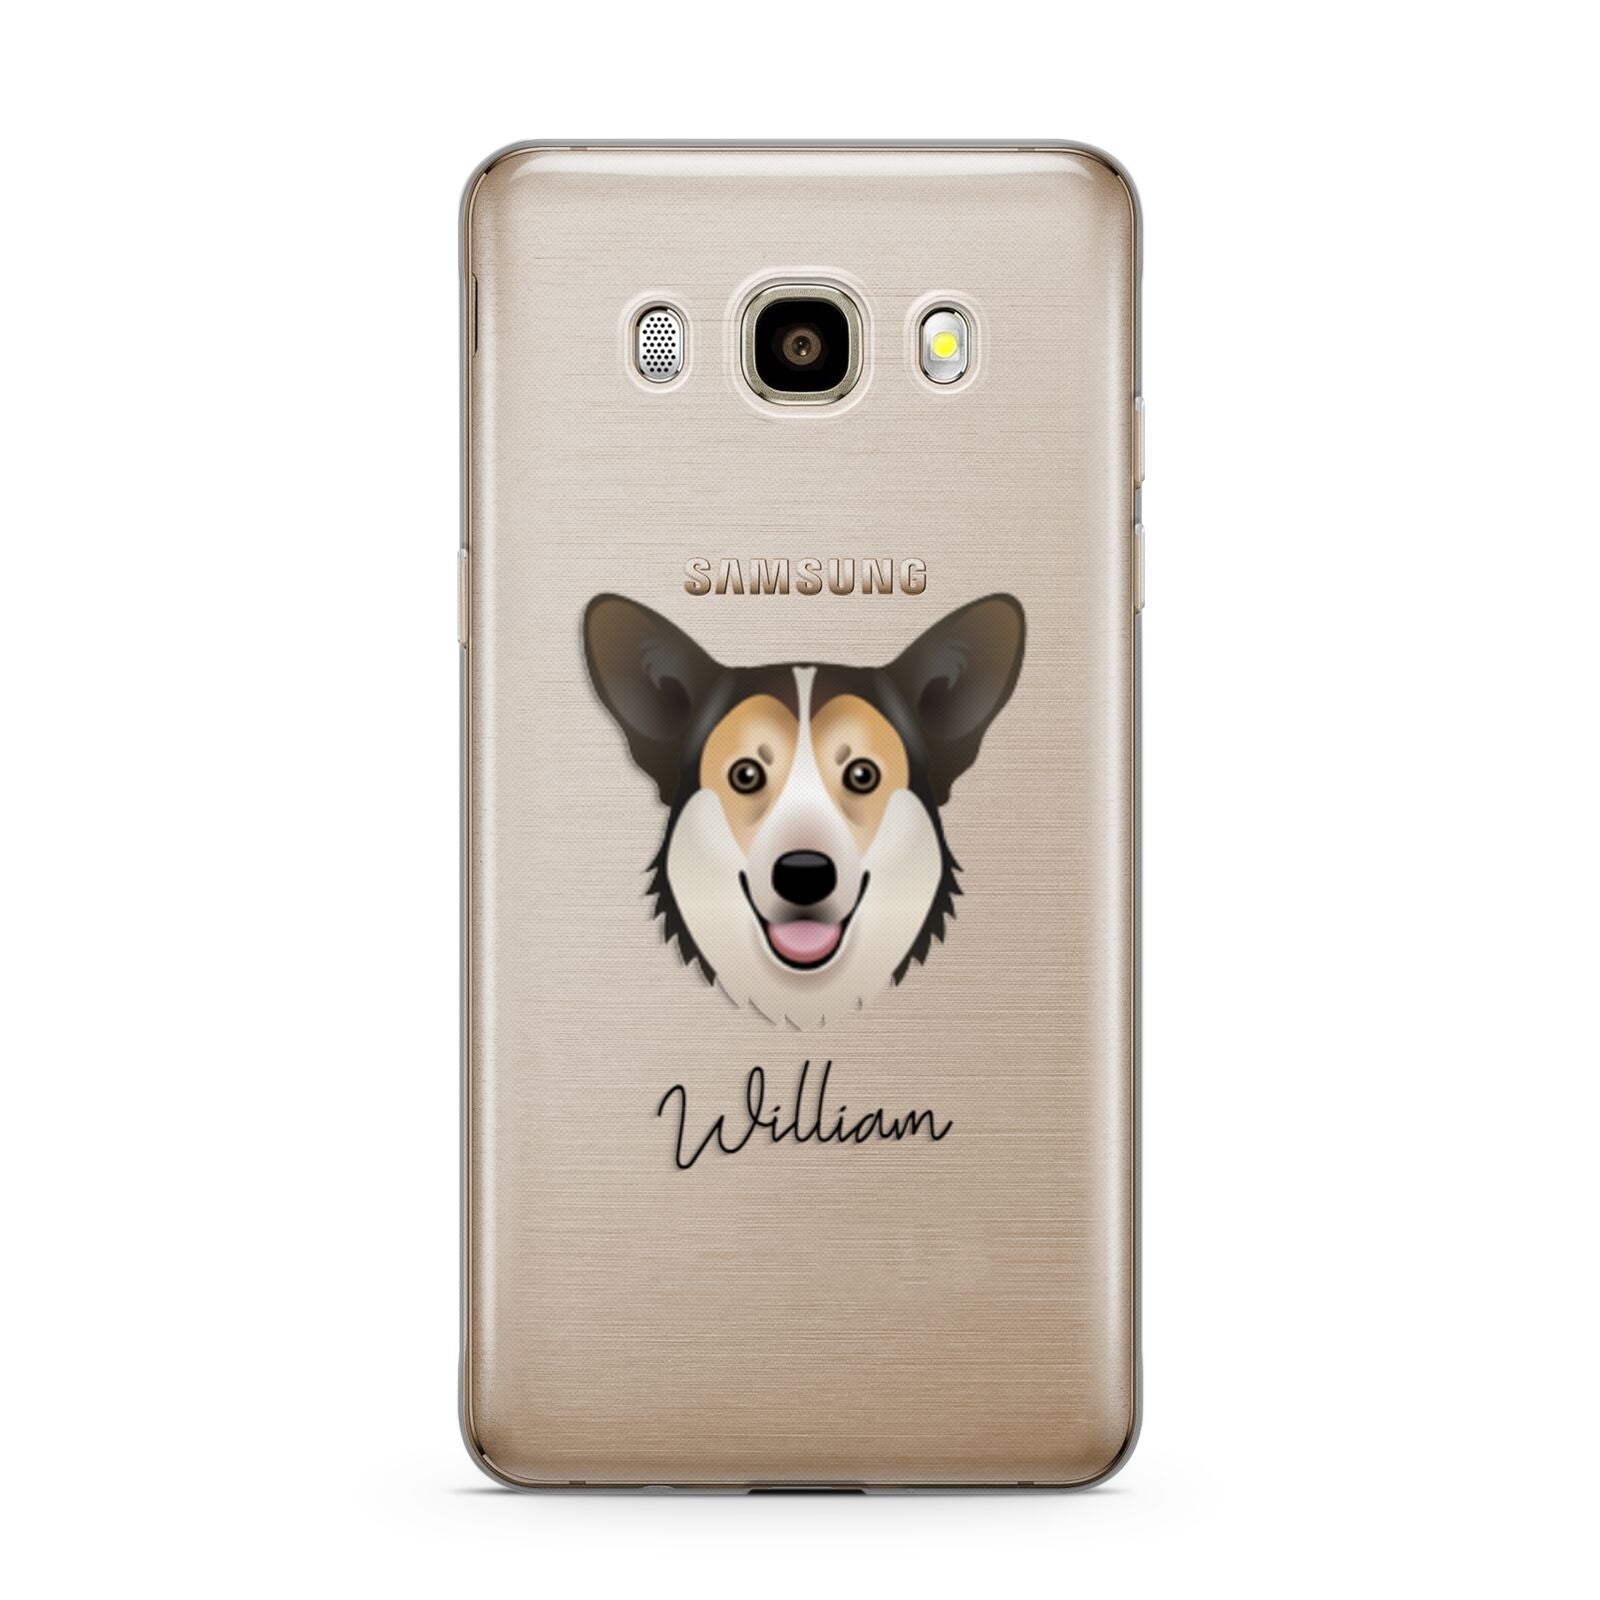 Pembroke Welsh Corgi Personalised Samsung Galaxy J7 2016 Case on gold phone